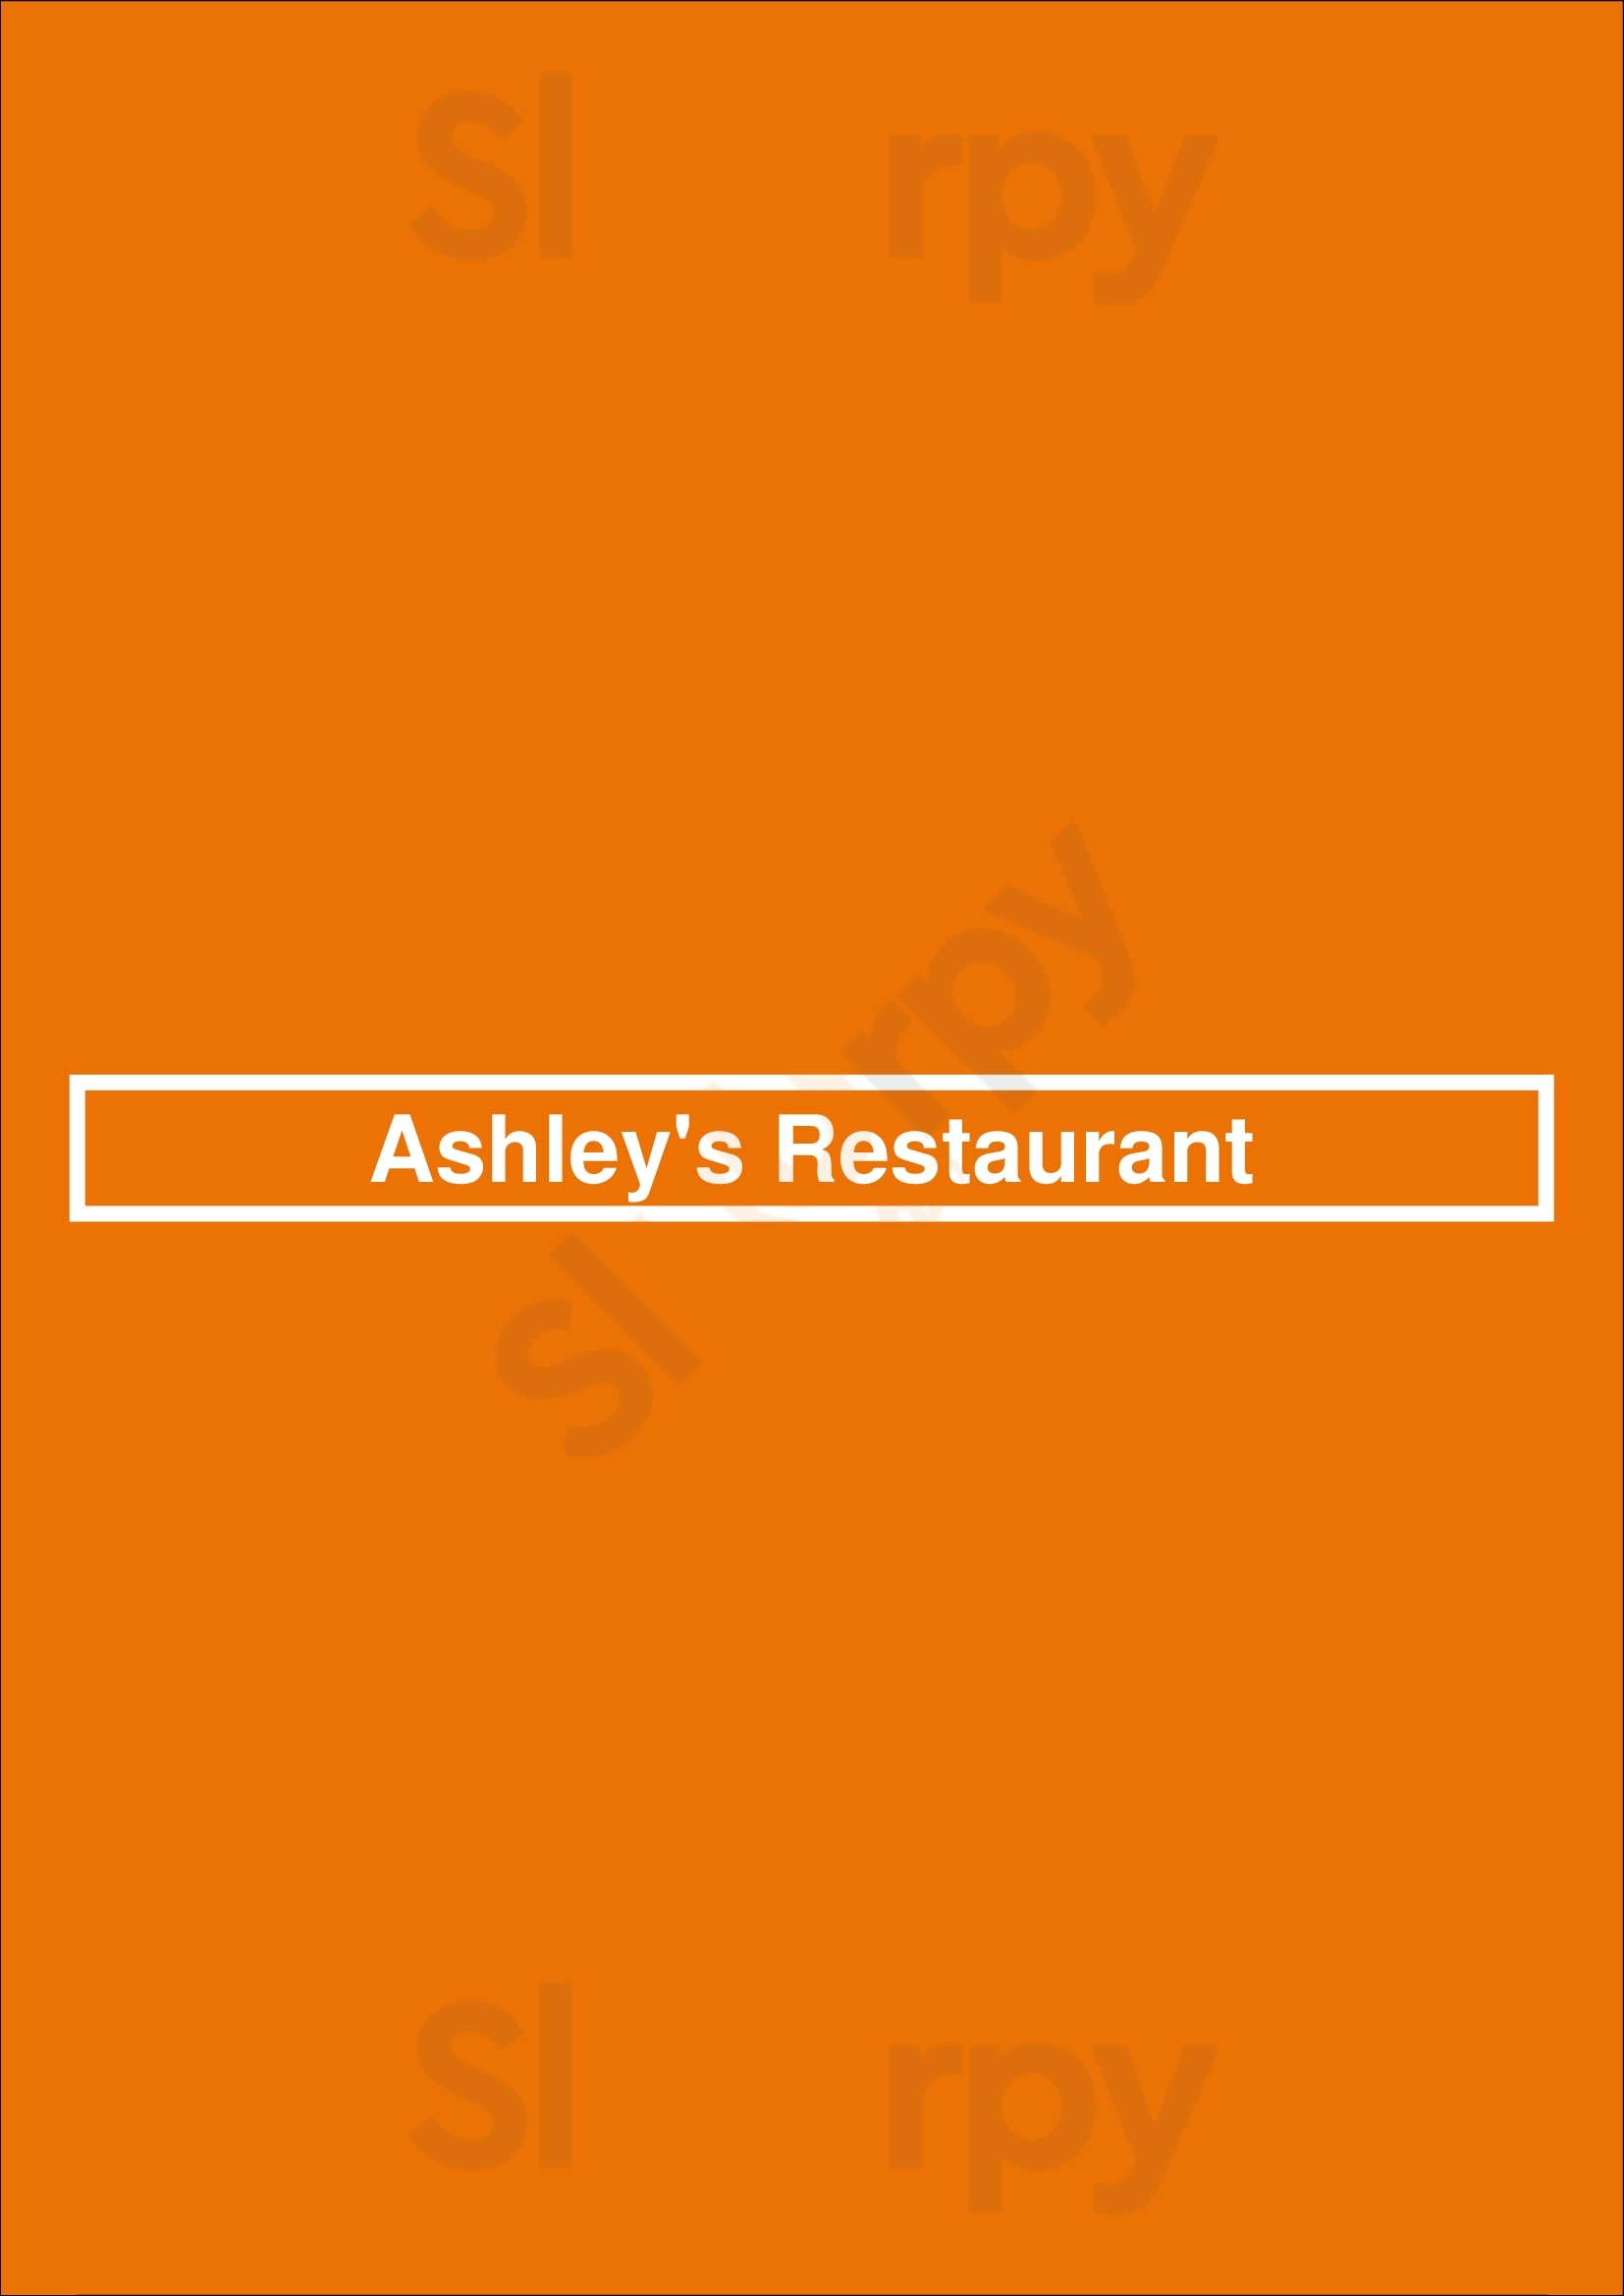 Ashley's Restaurant Braintree Menu - 1